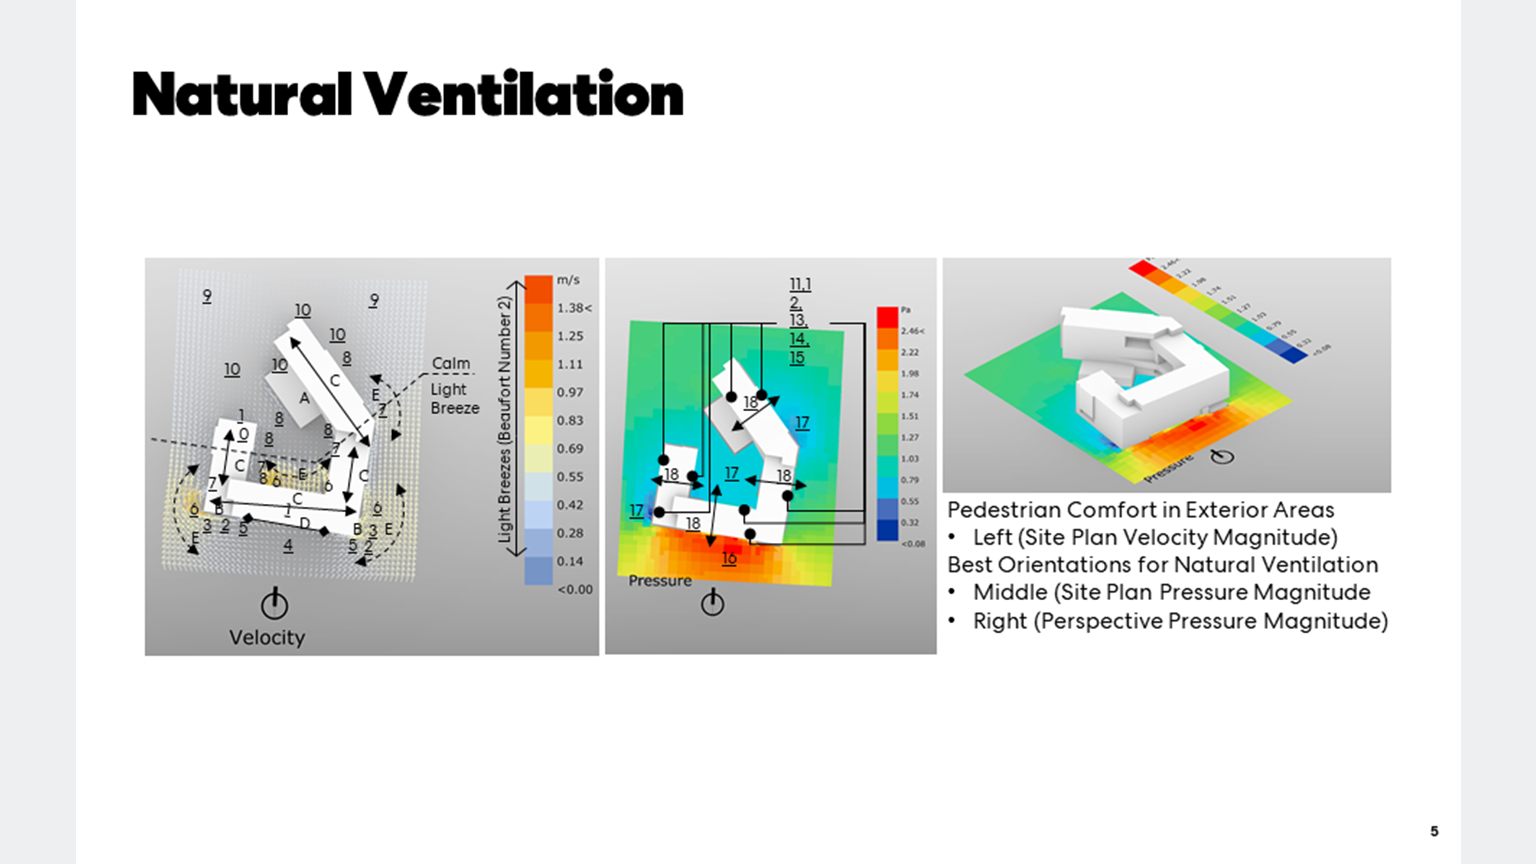 Natural Ventilation diagrams.